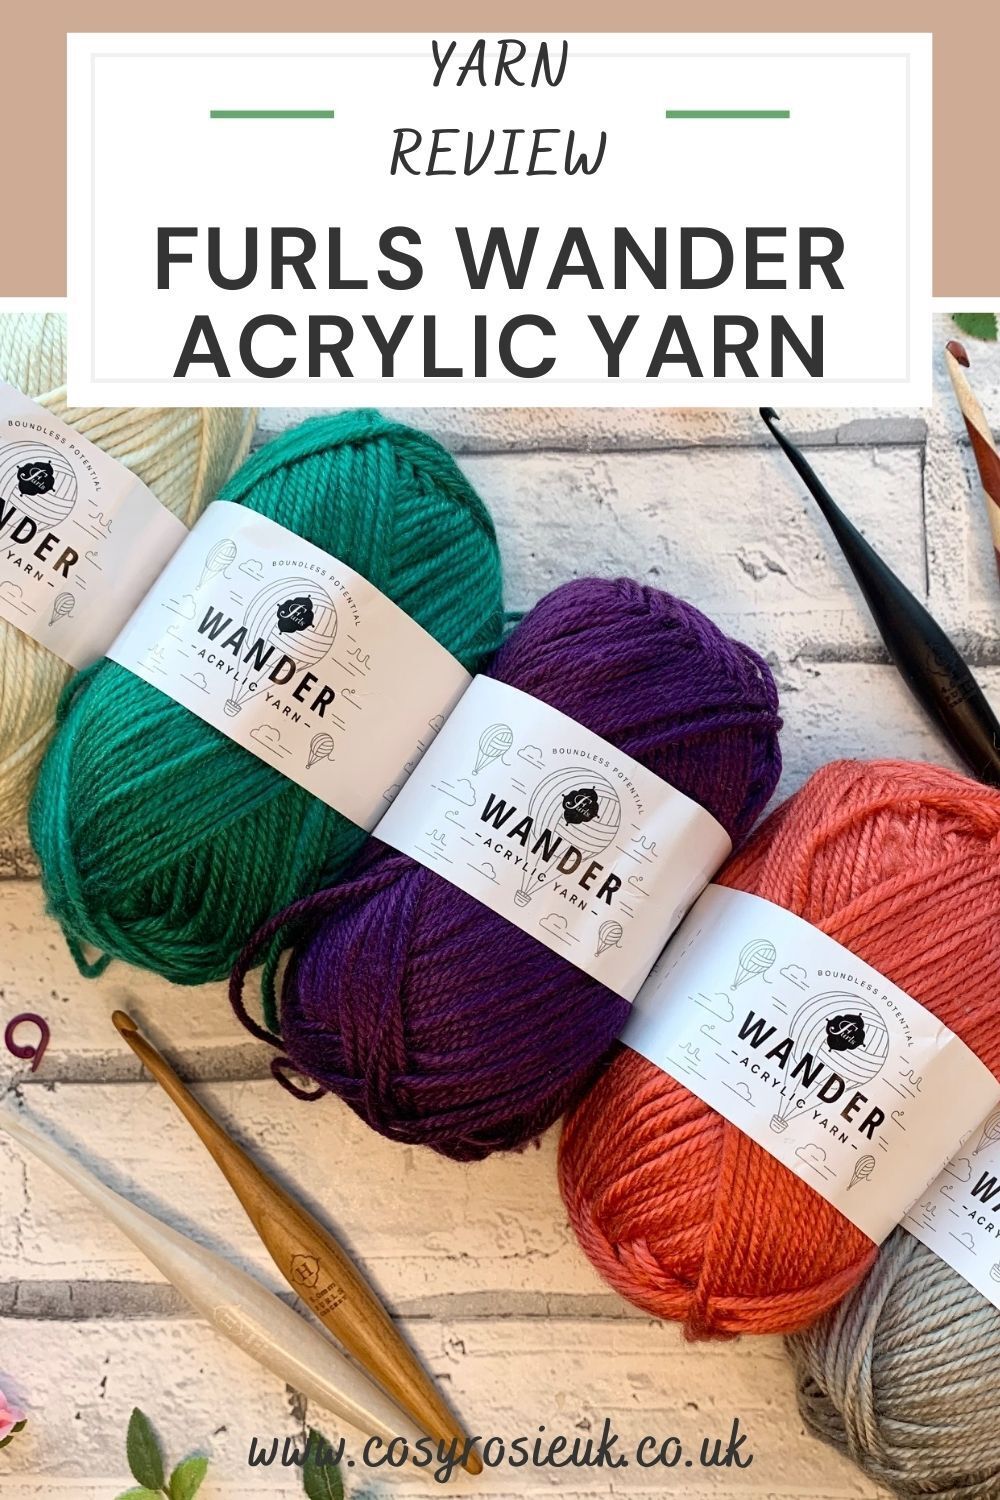 Furls Wander Acrylic Yarn Review